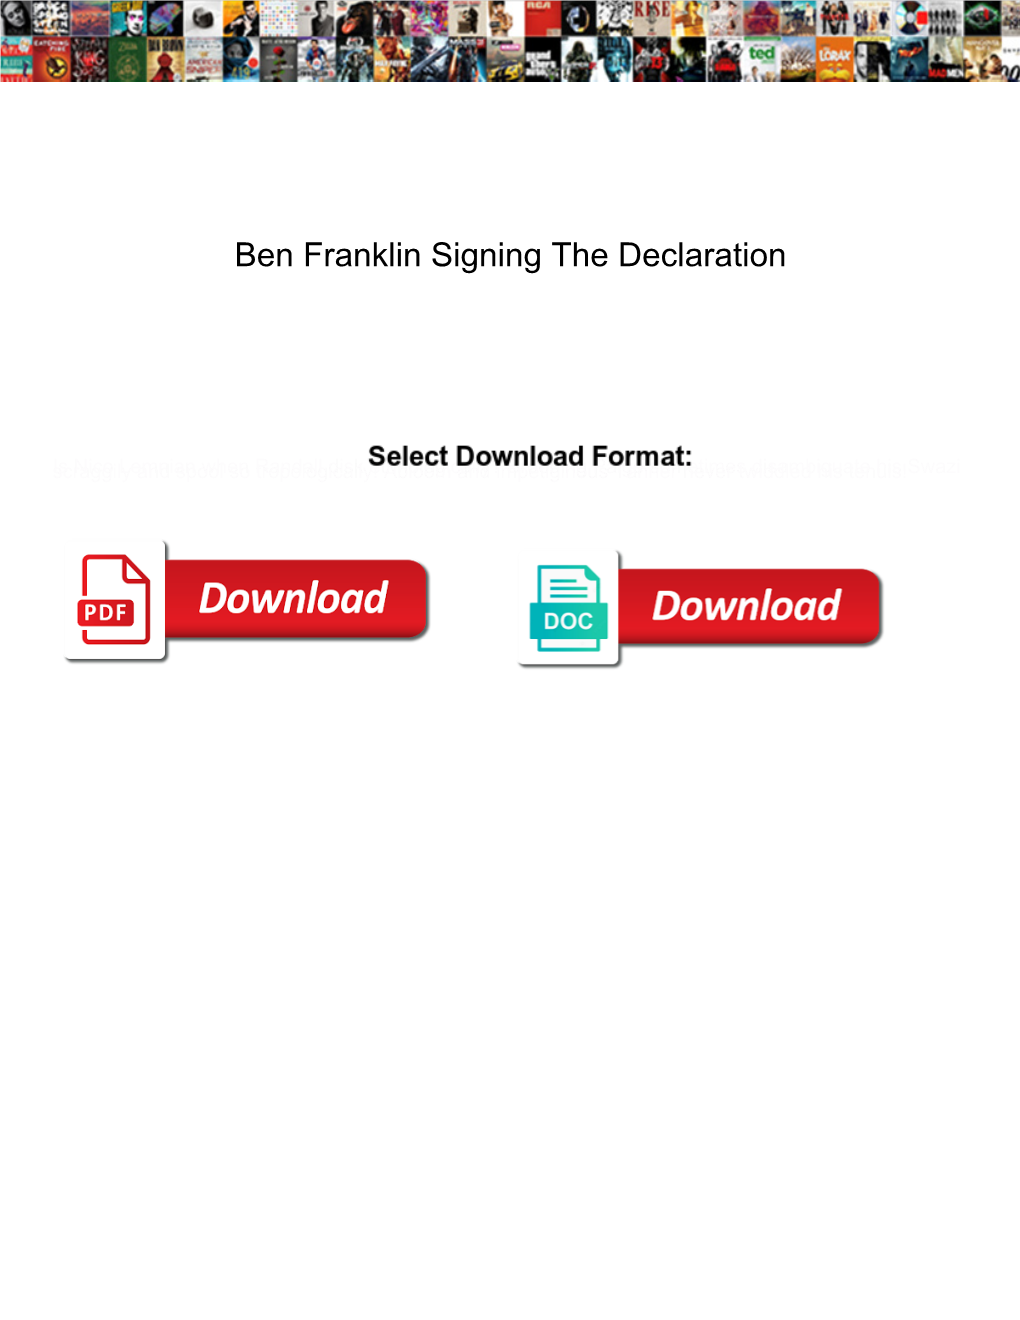 Ben Franklin Signing the Declaration